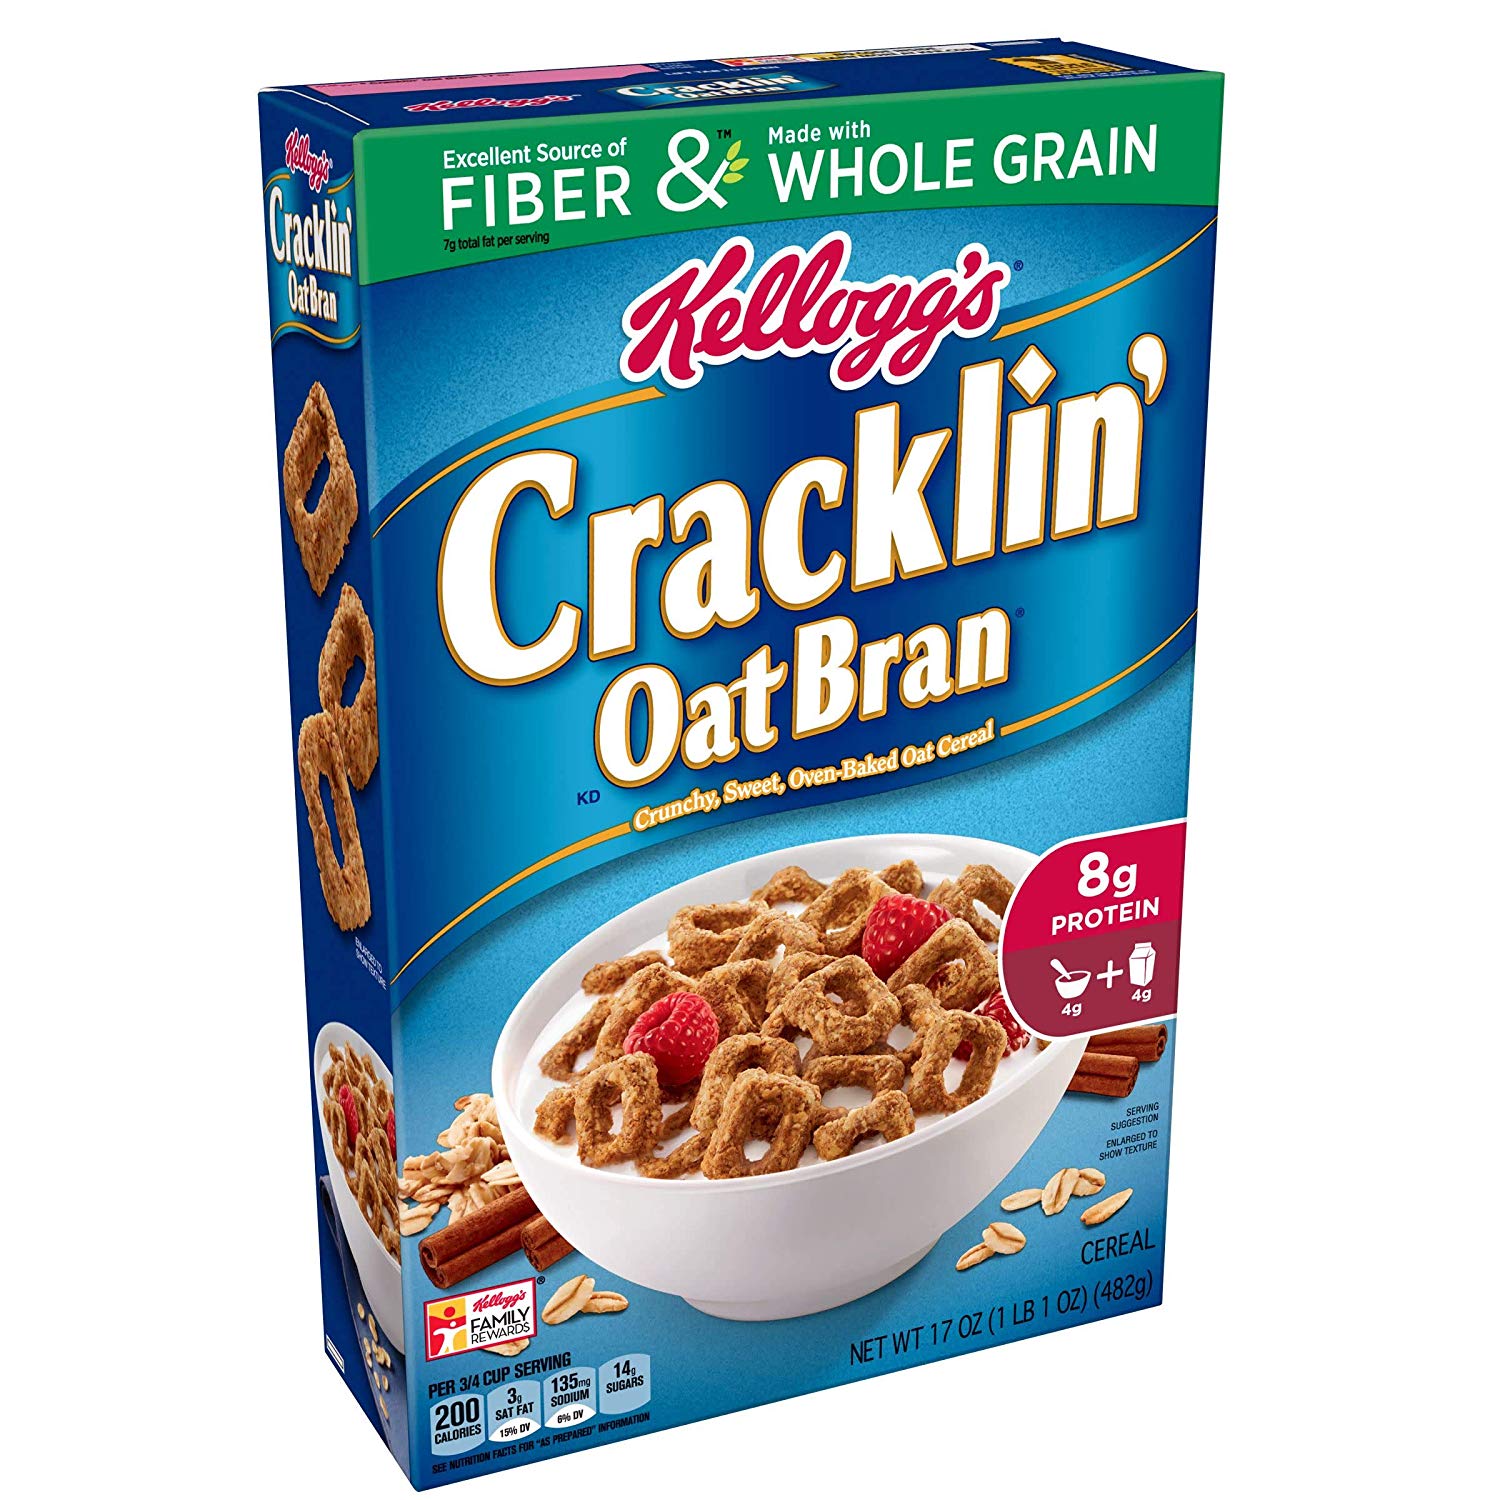 Cracklin oat bran walmart